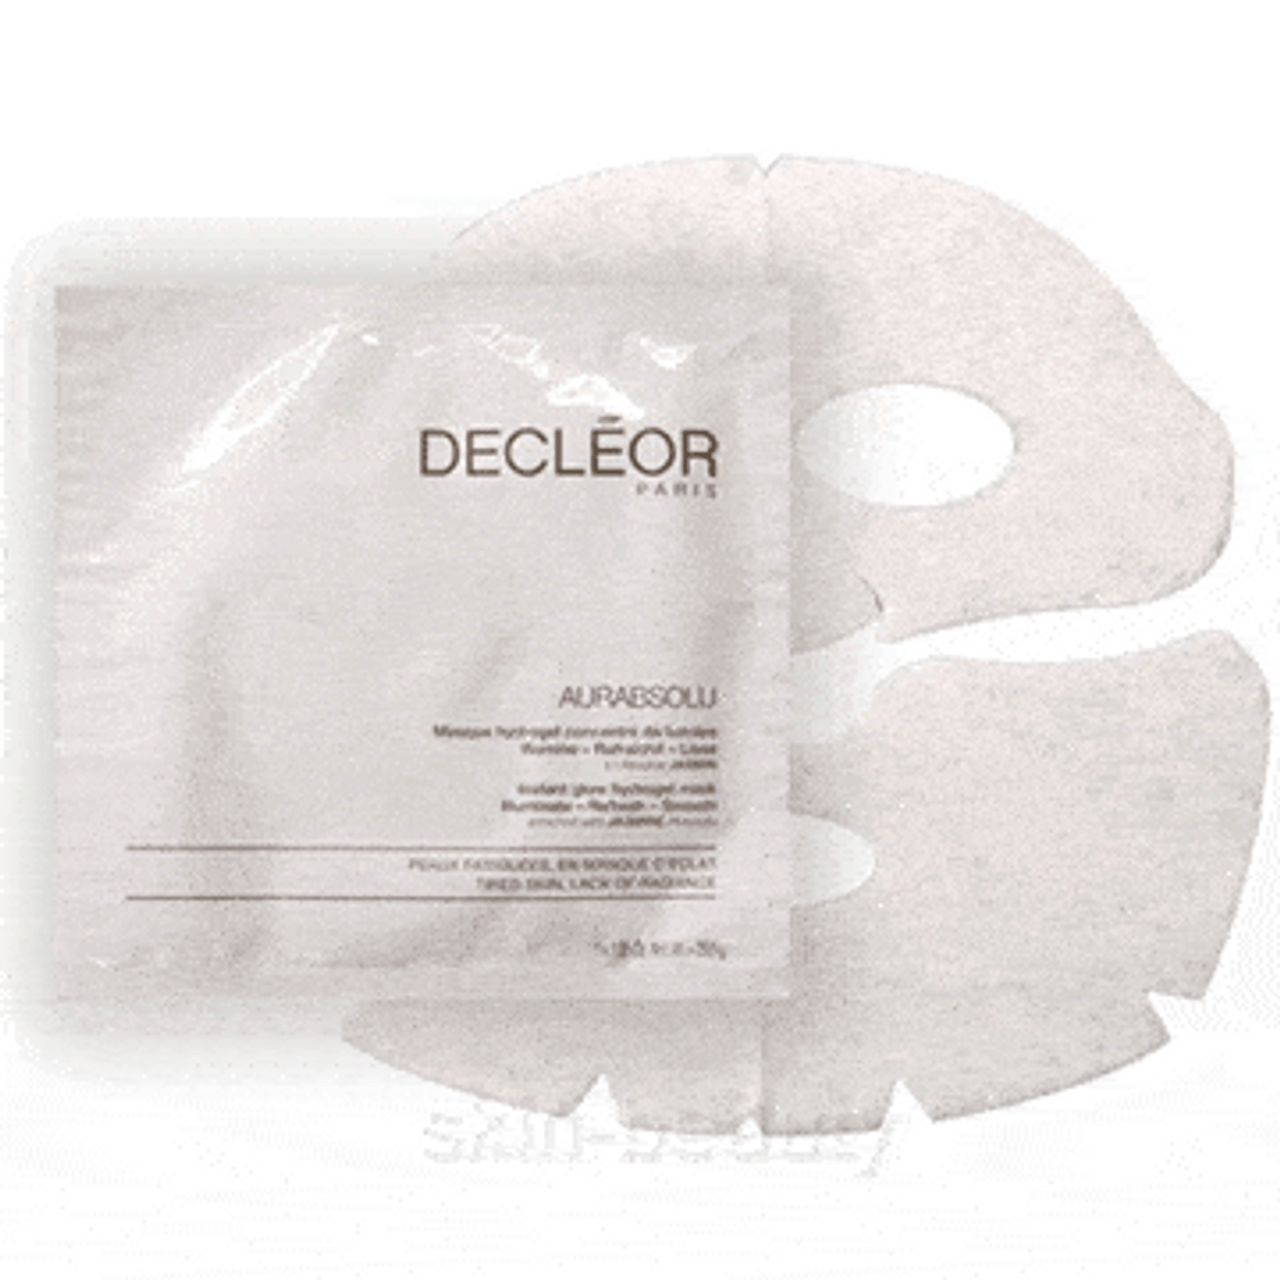 Decleor Aurabsolu Instant Glow Hydrogel Mask - 1.05 oz (E1921600)